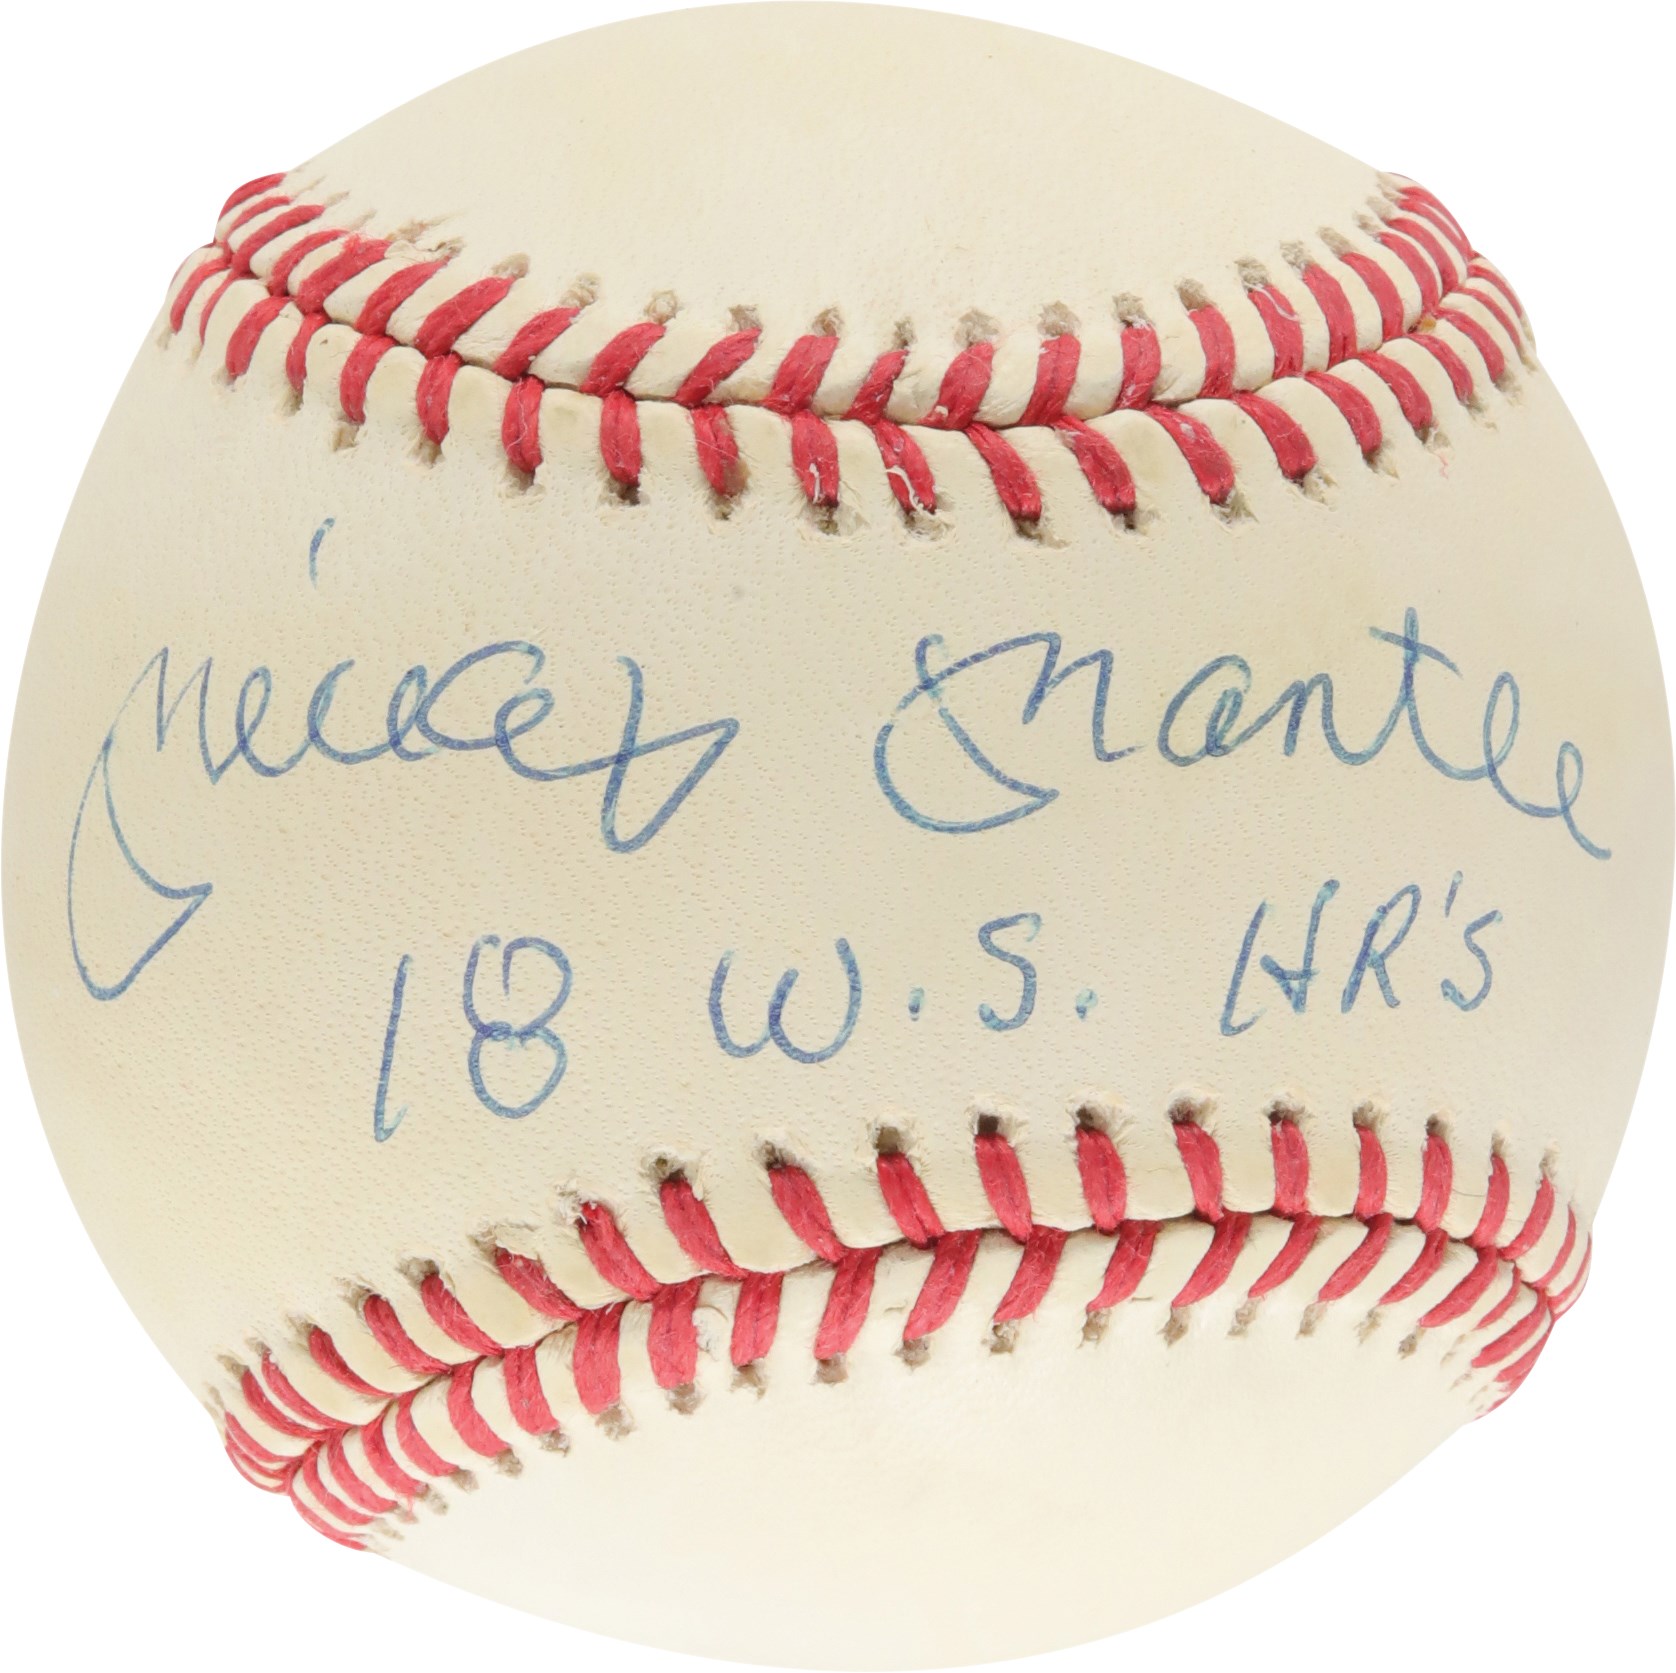 Mickey Mantle "18 W.S. HR's" Single-Signed Baseball (PSA)